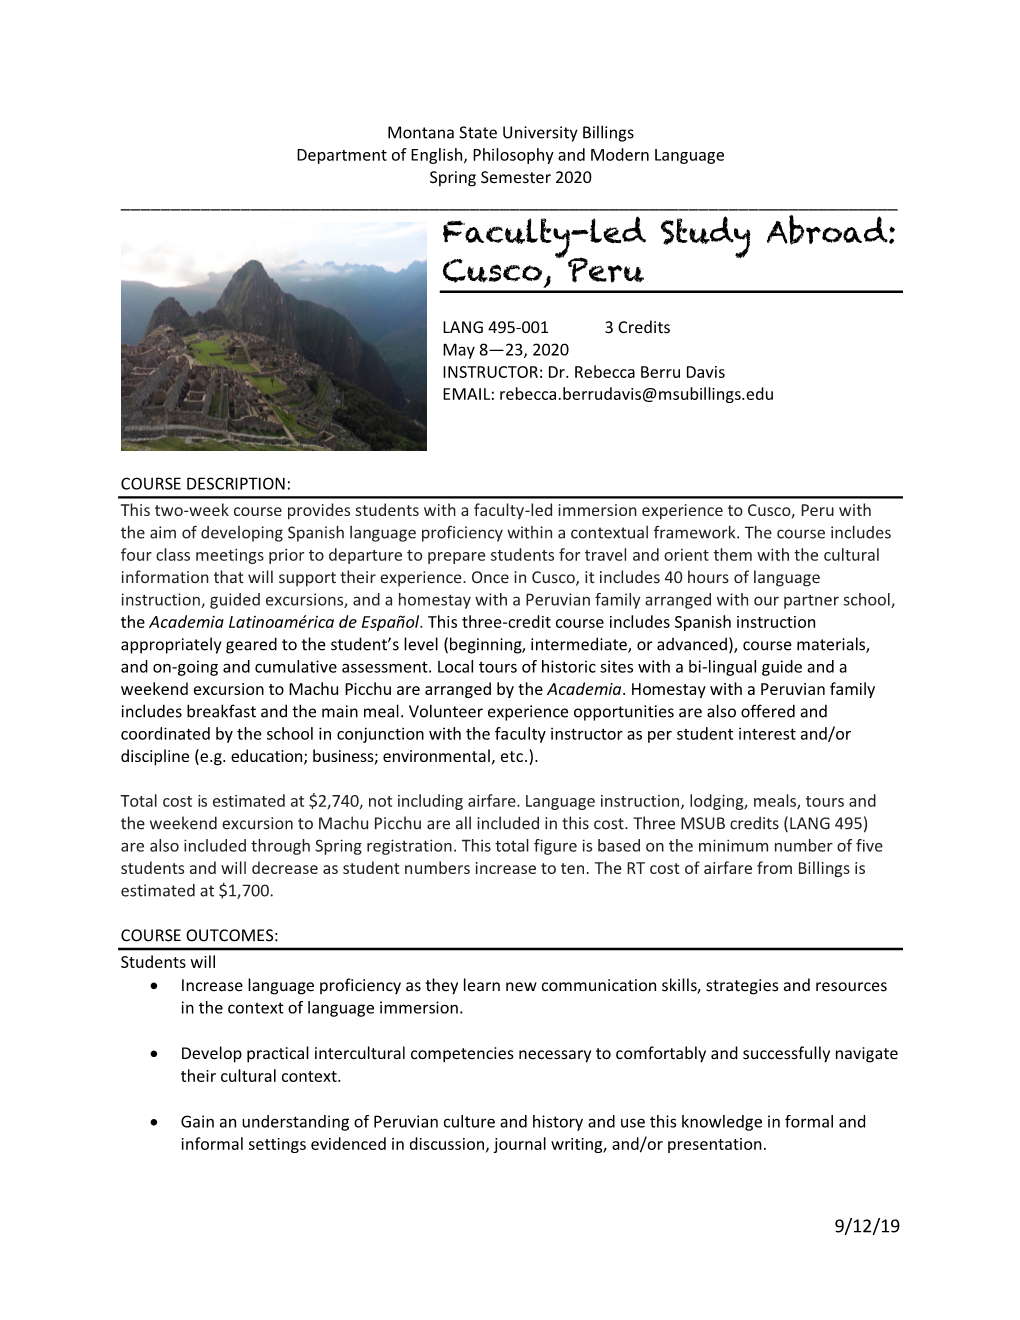 Faculty-Led Study Abroad: Cusco, Peru